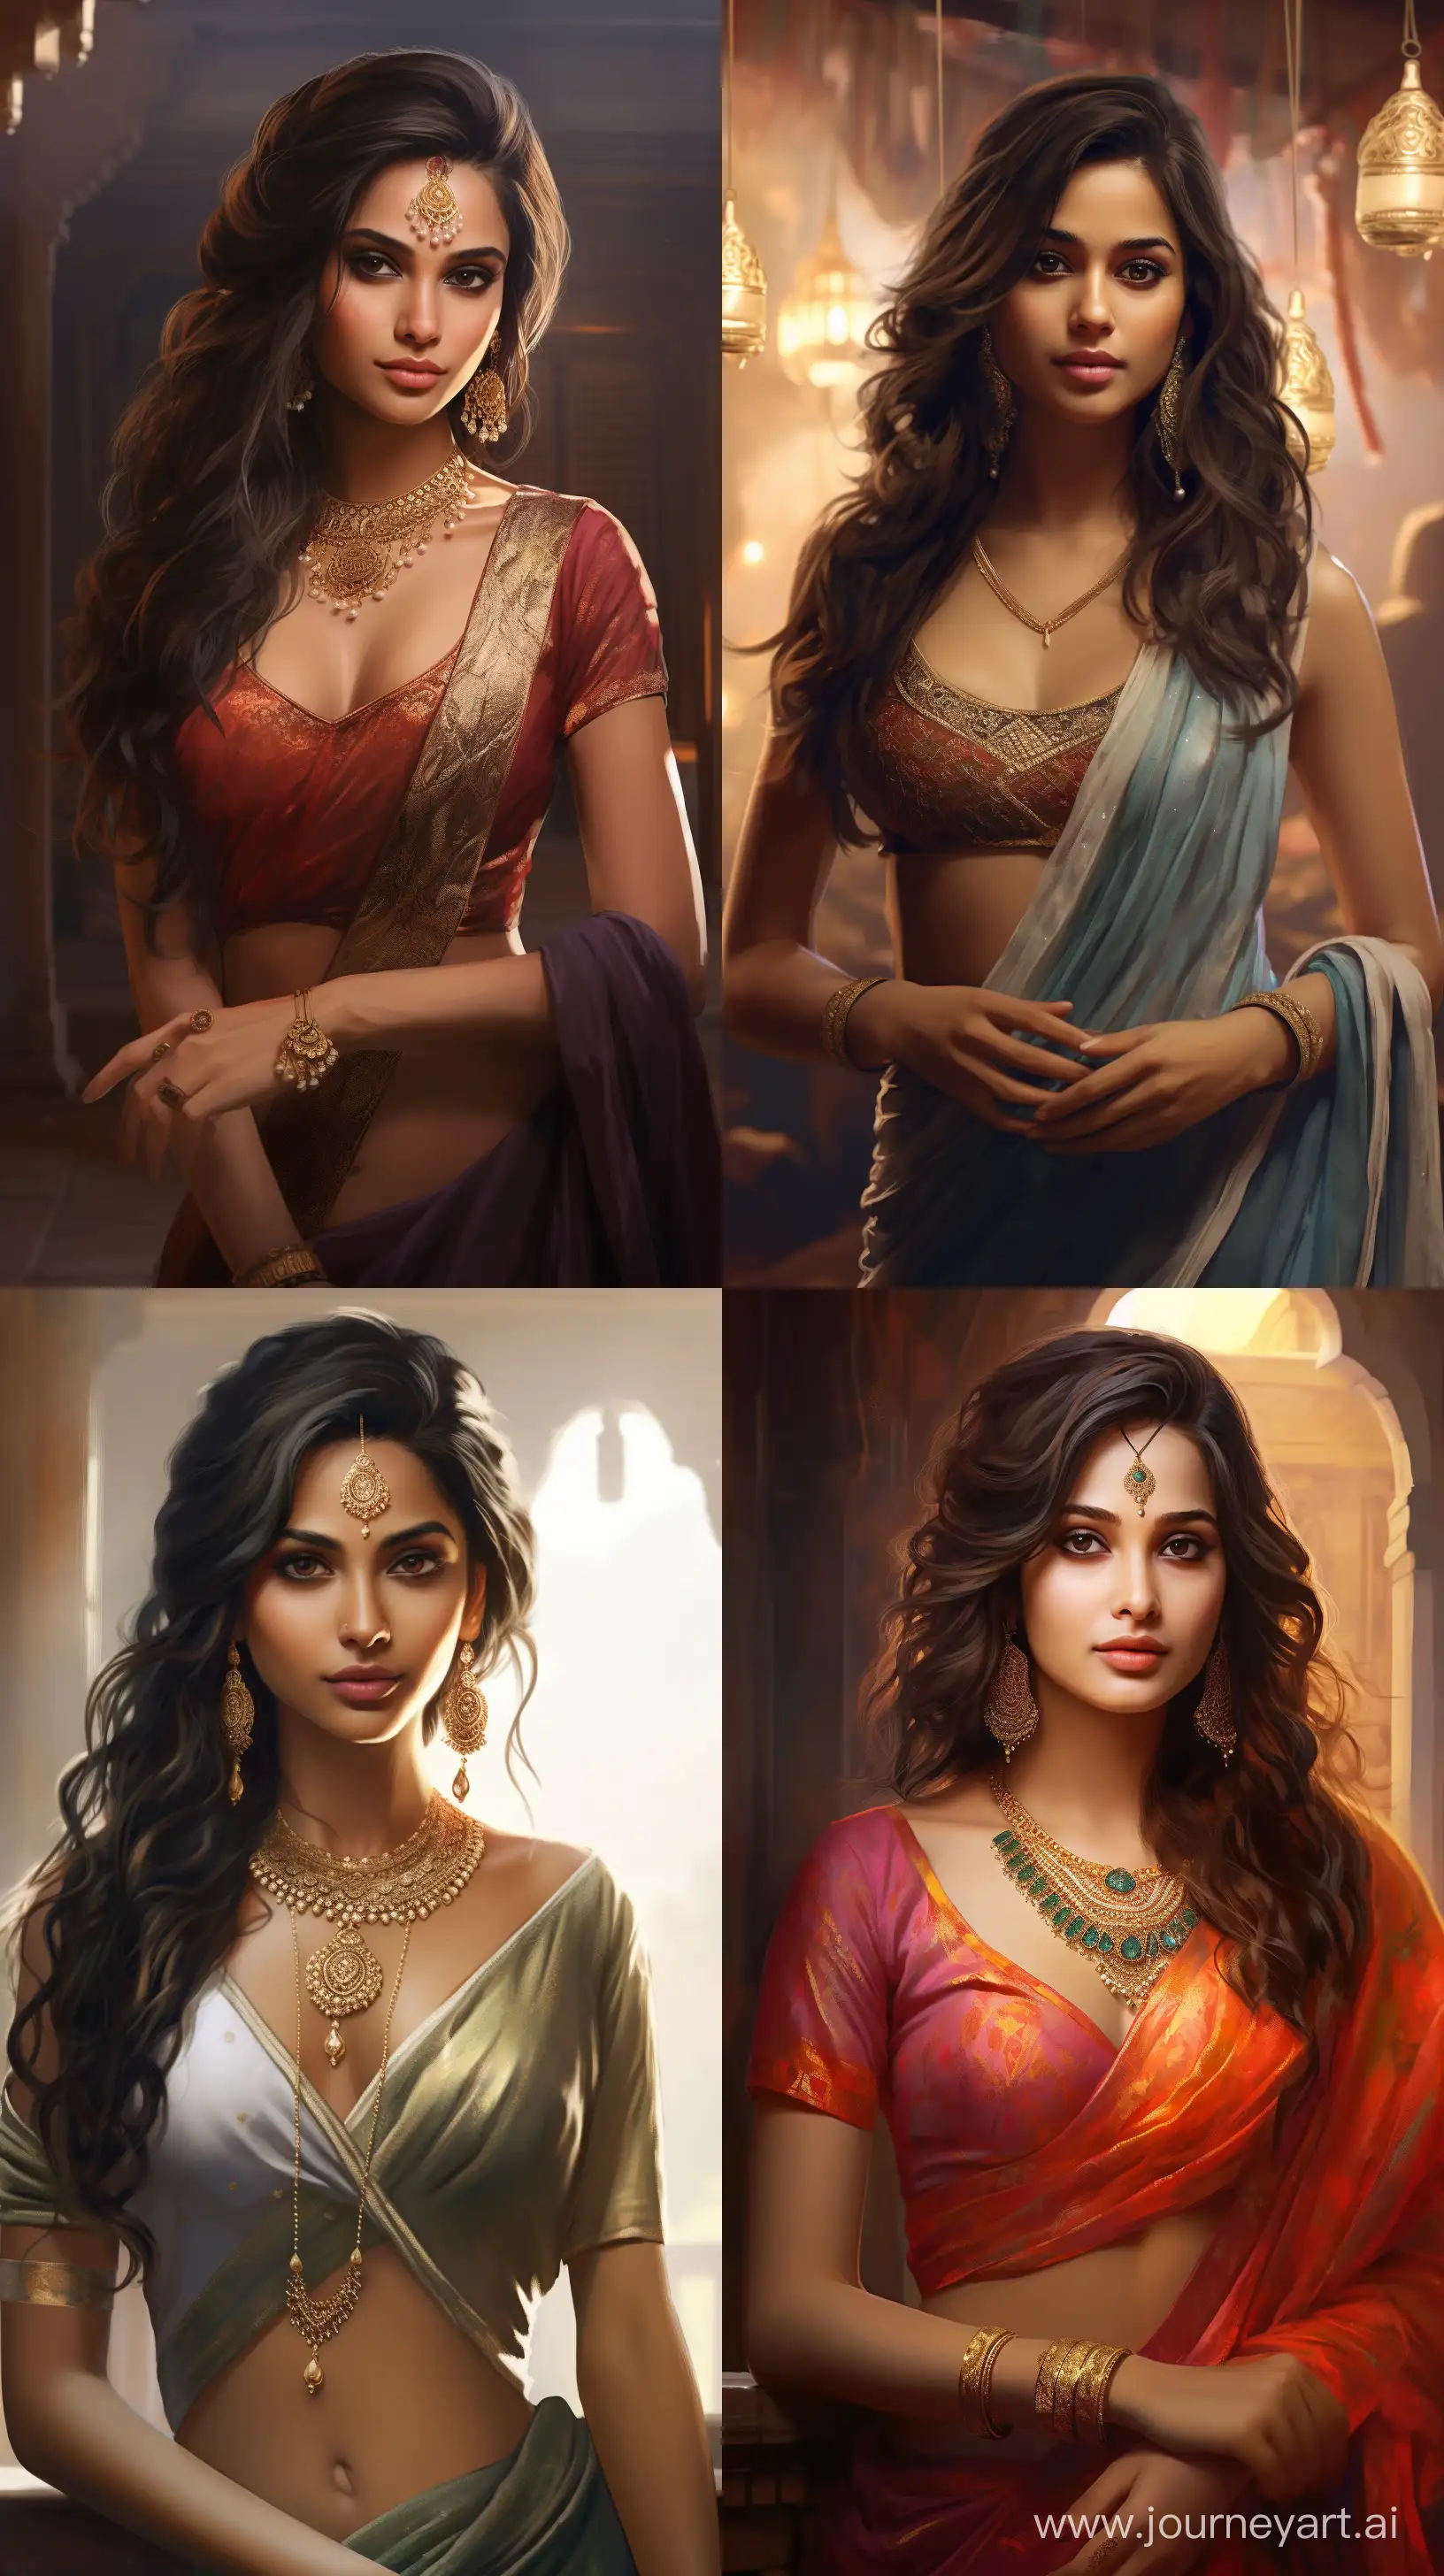 Elegant-Indian-Women-in-Traditional-Attire-Vibrant-Digital-Art-in-4K-Resolution